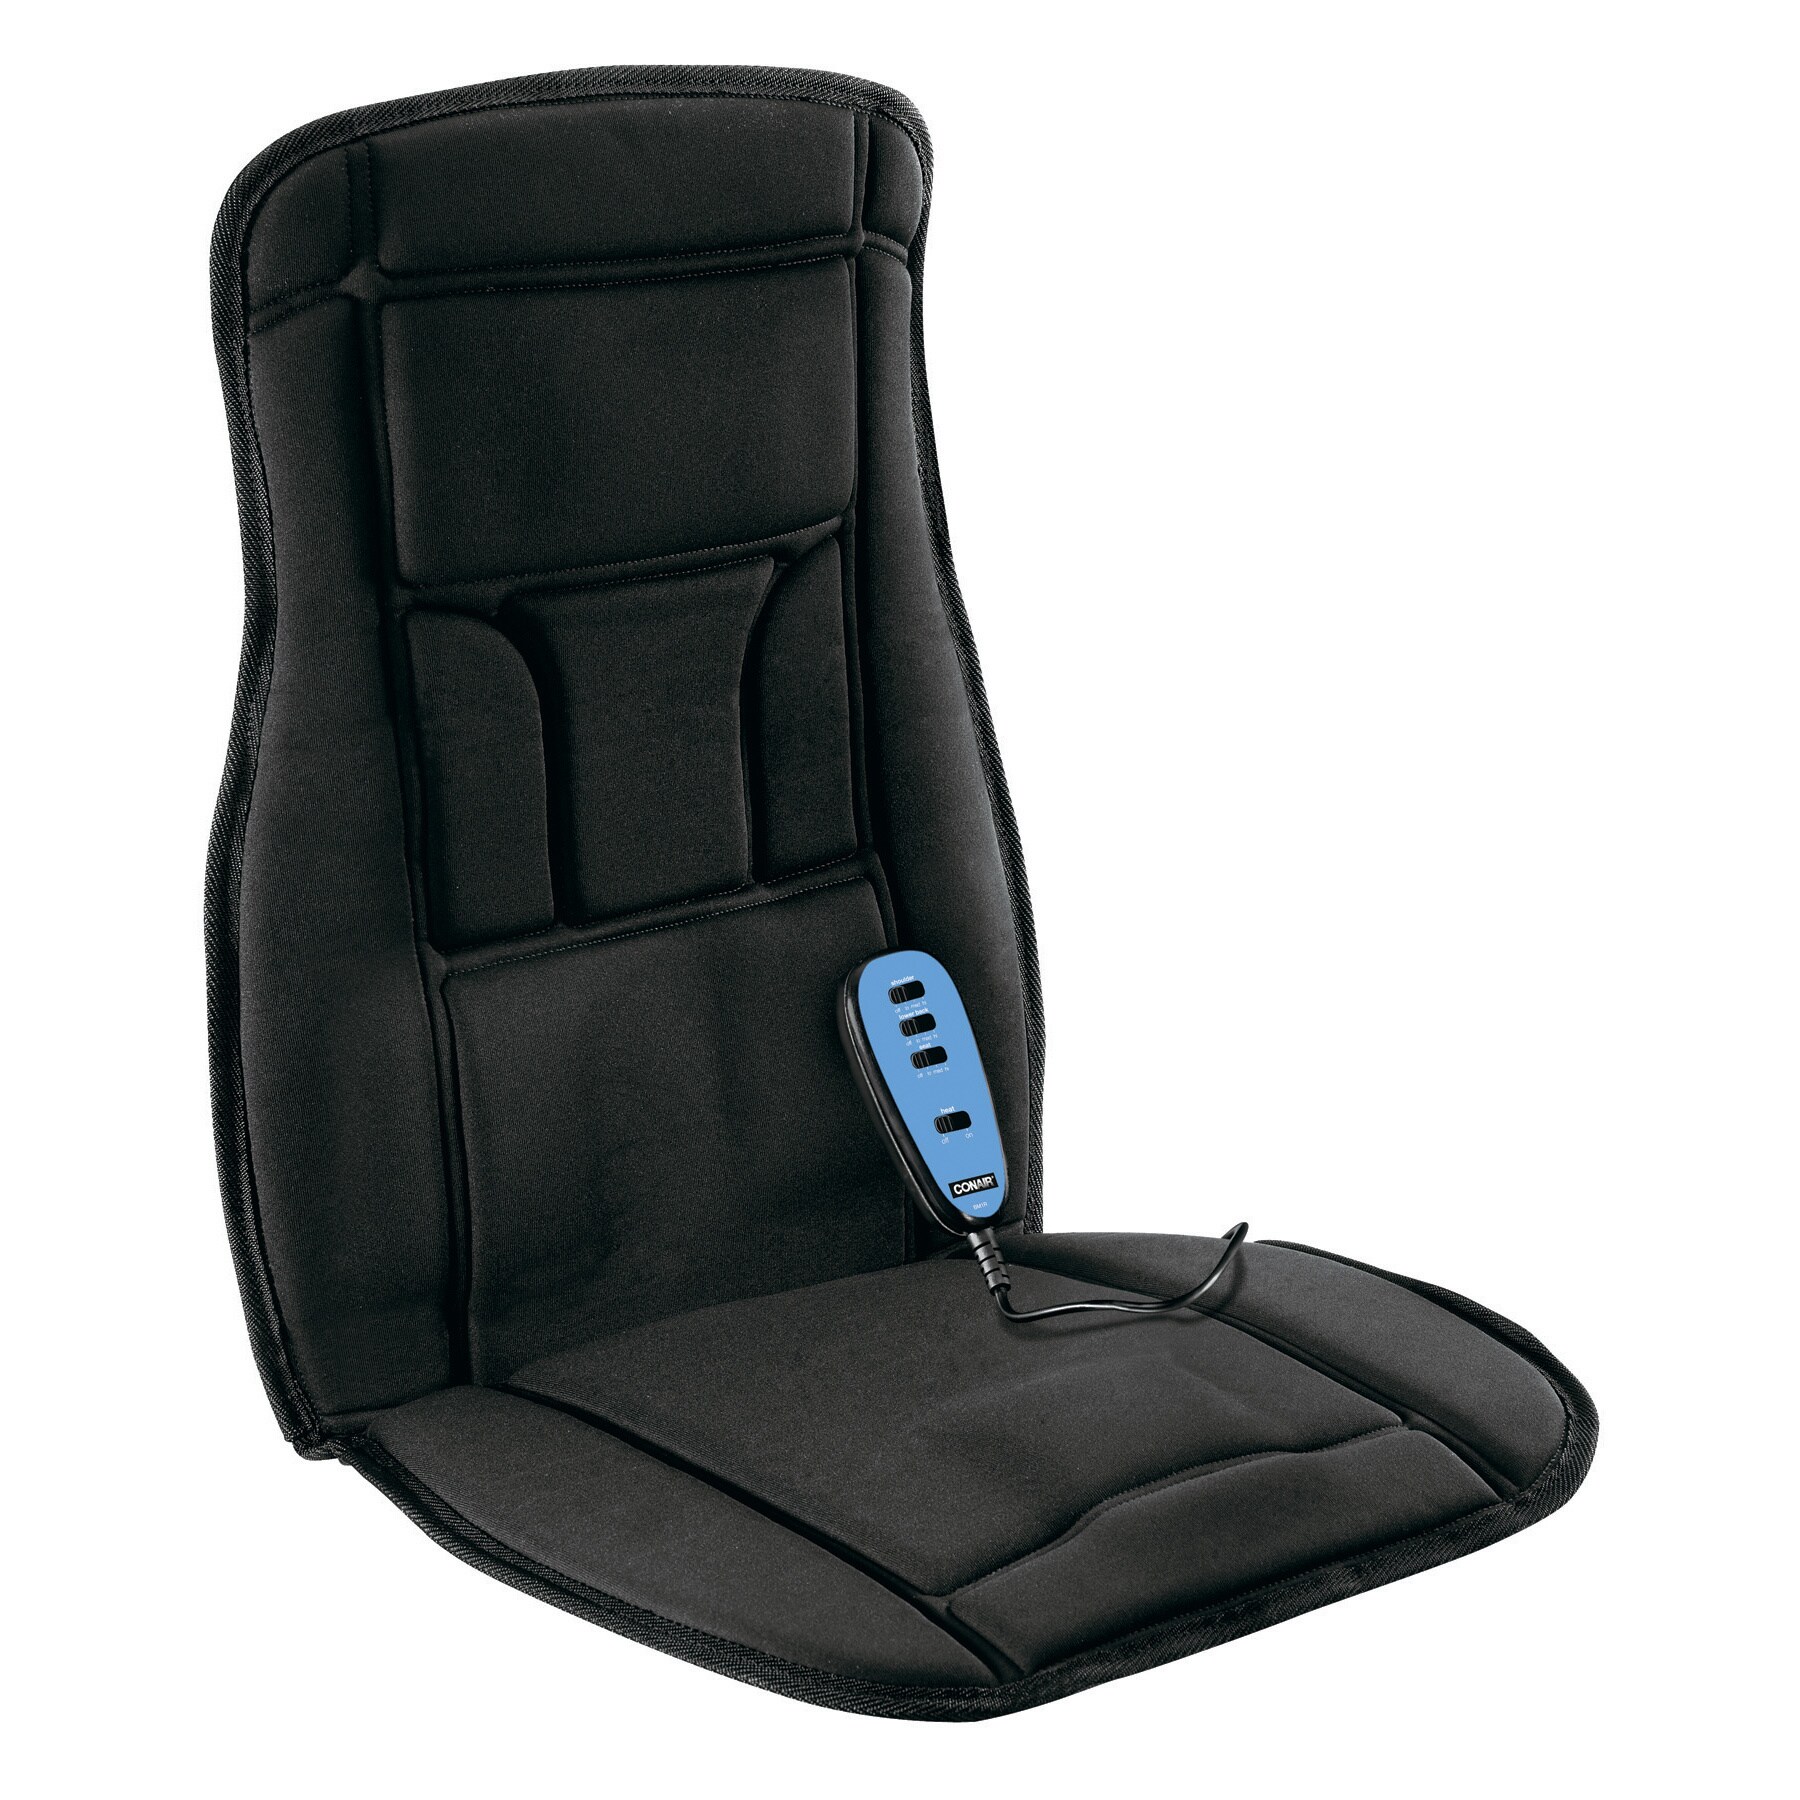 Conair Bm1rl Body Benefits Heated Massaging Seat Cushion